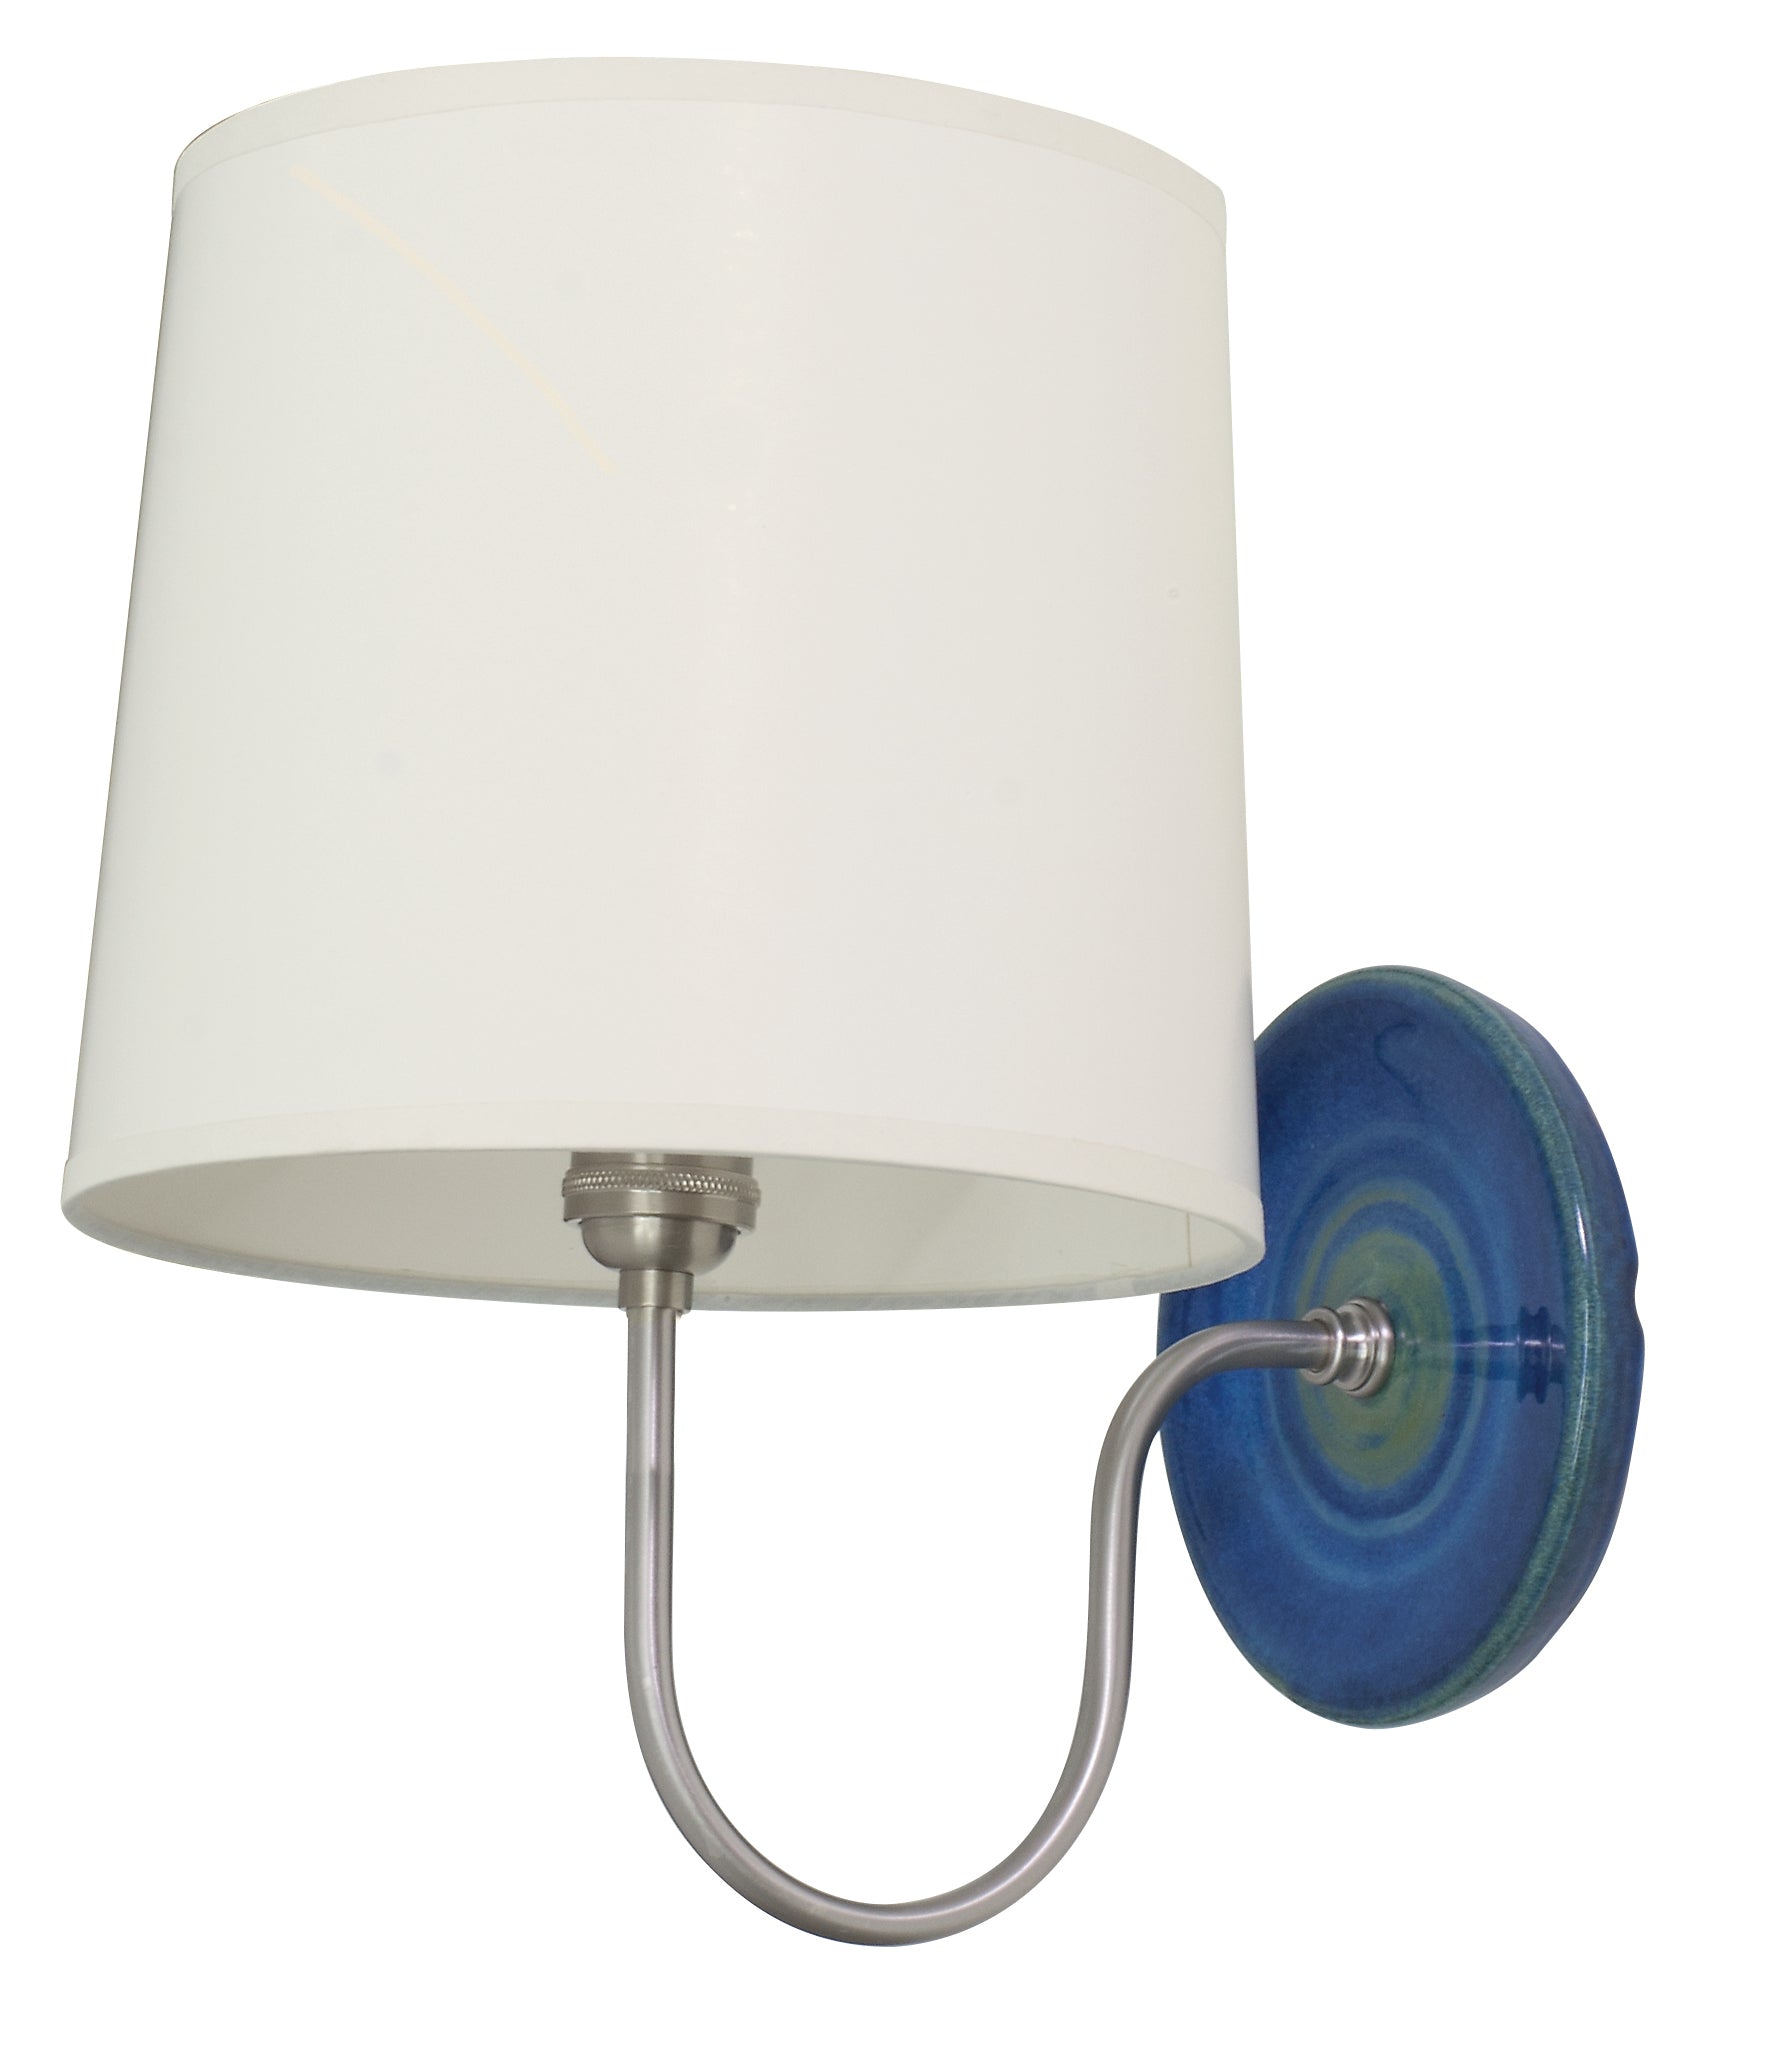 House of Troy Scatchard Wall Lamp Blue Gloss GS725-BG